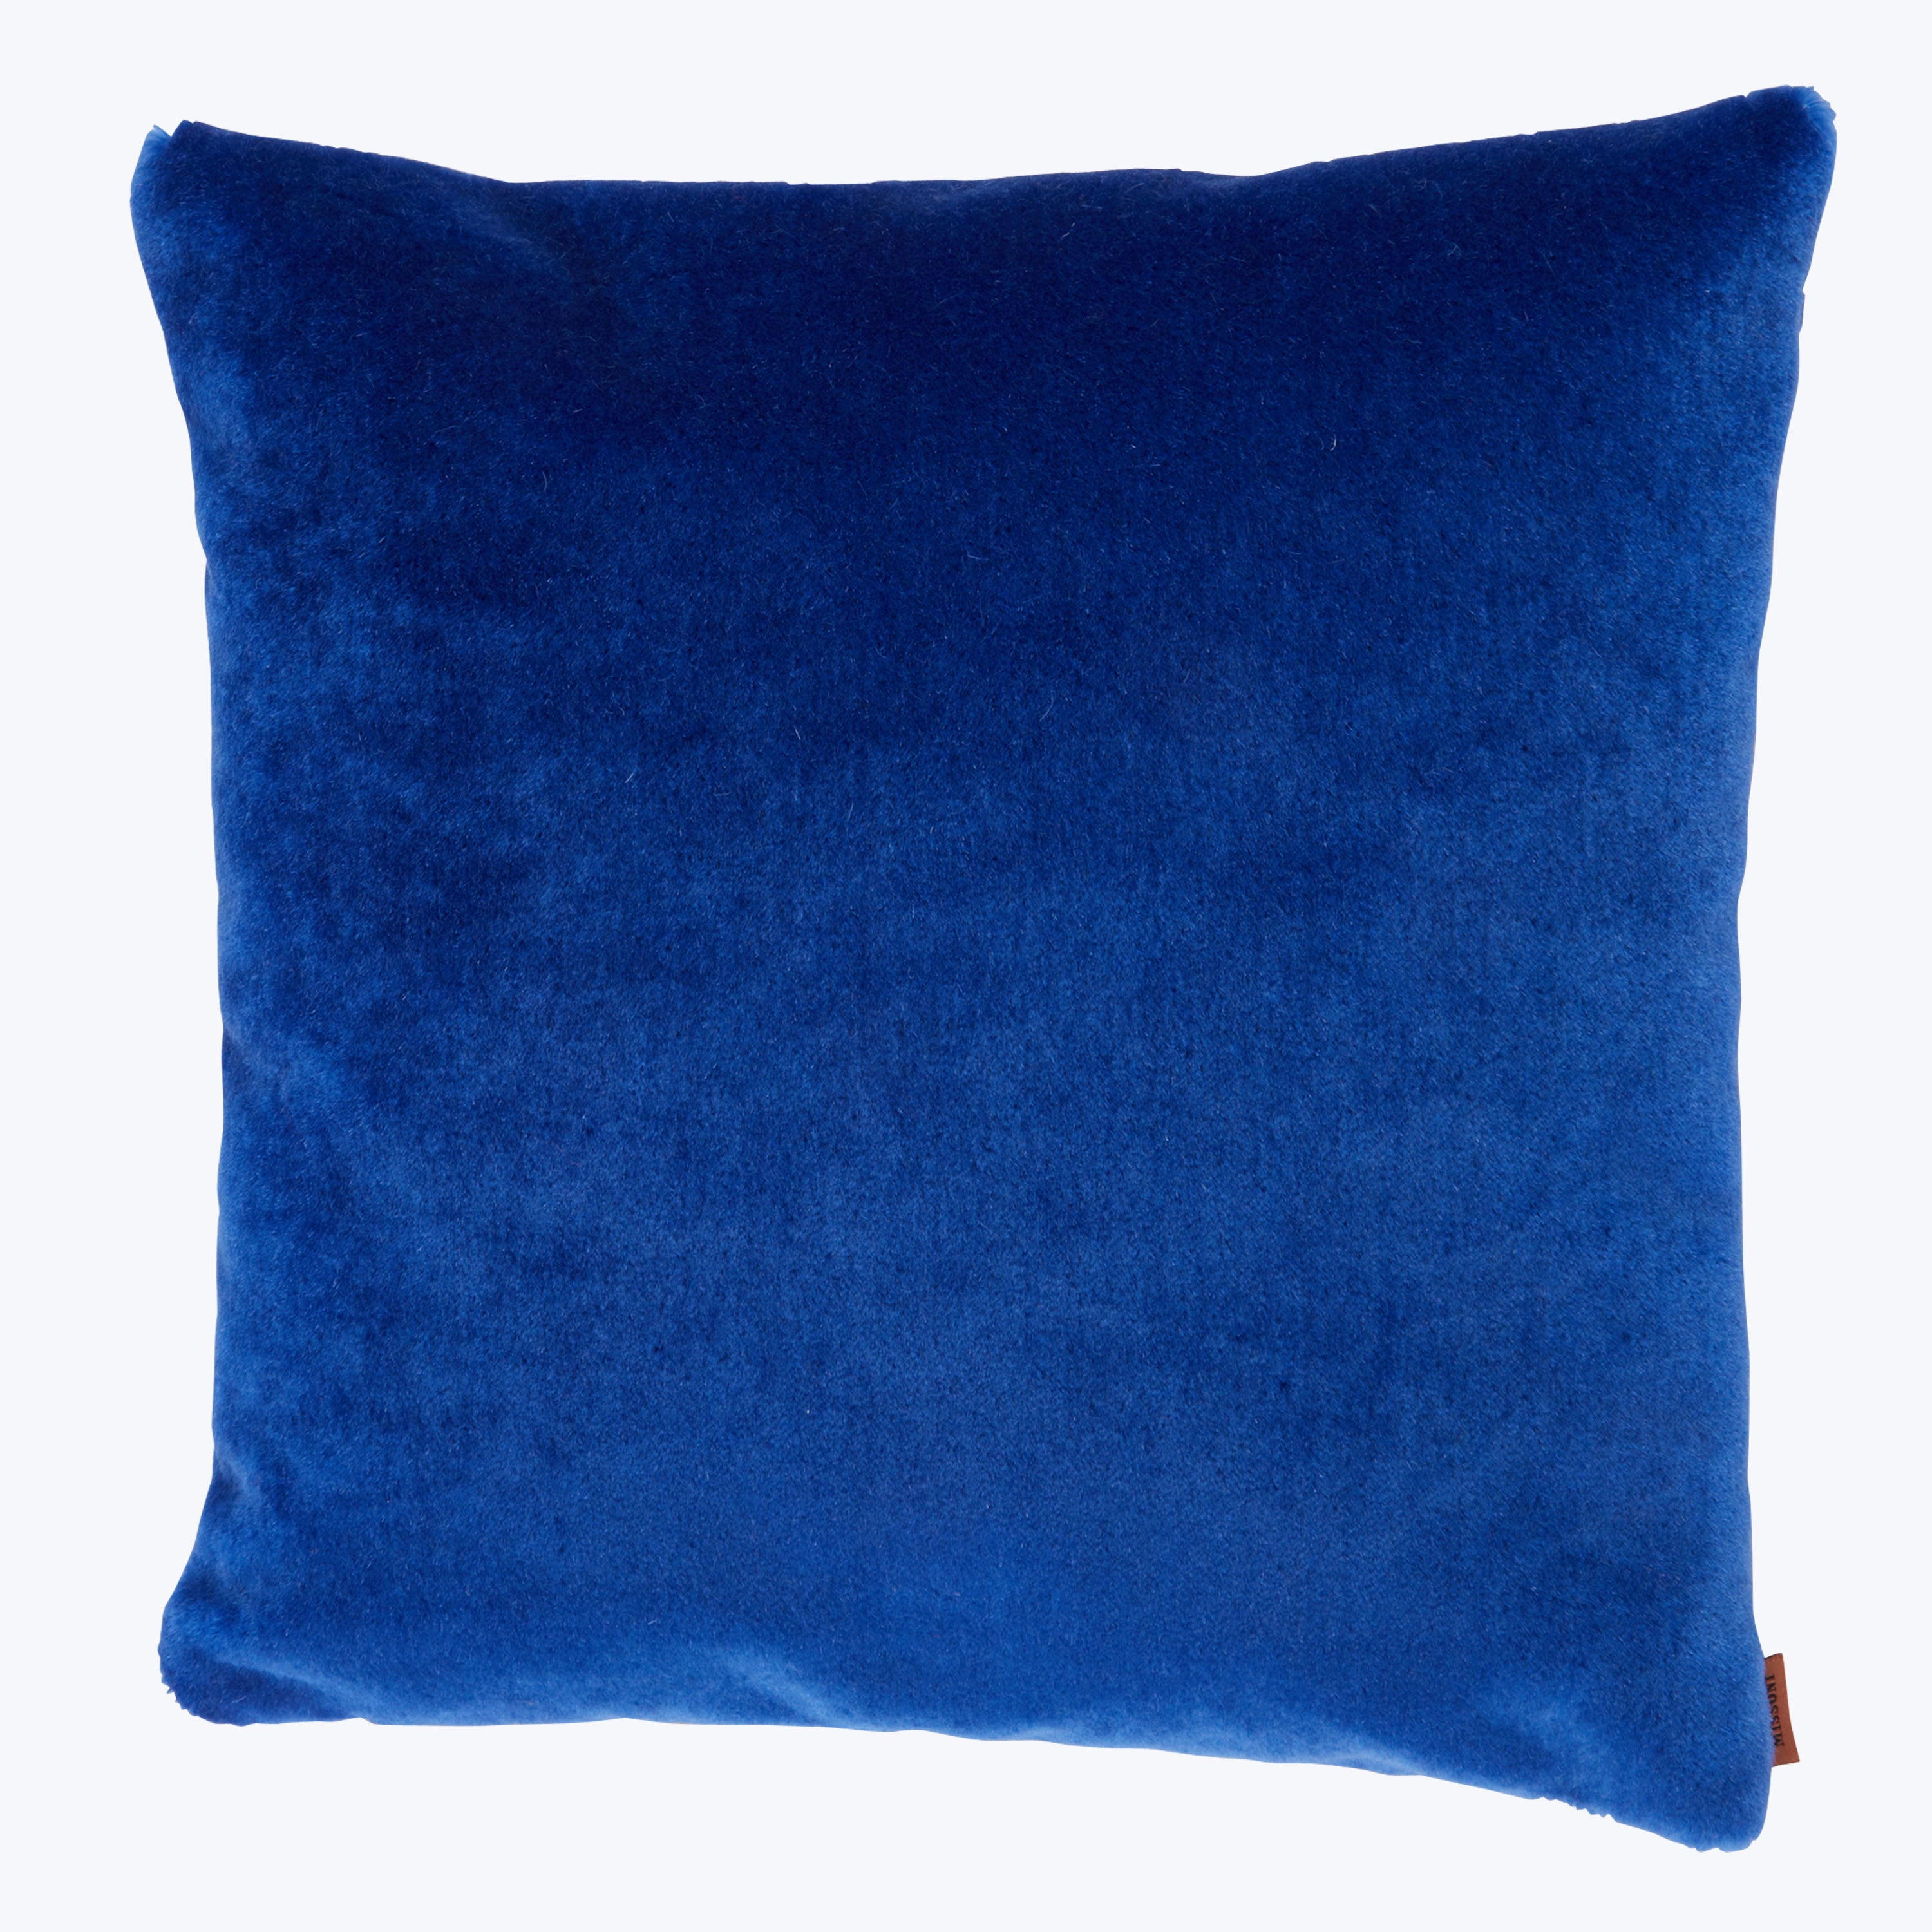 Royal Pillow Blue